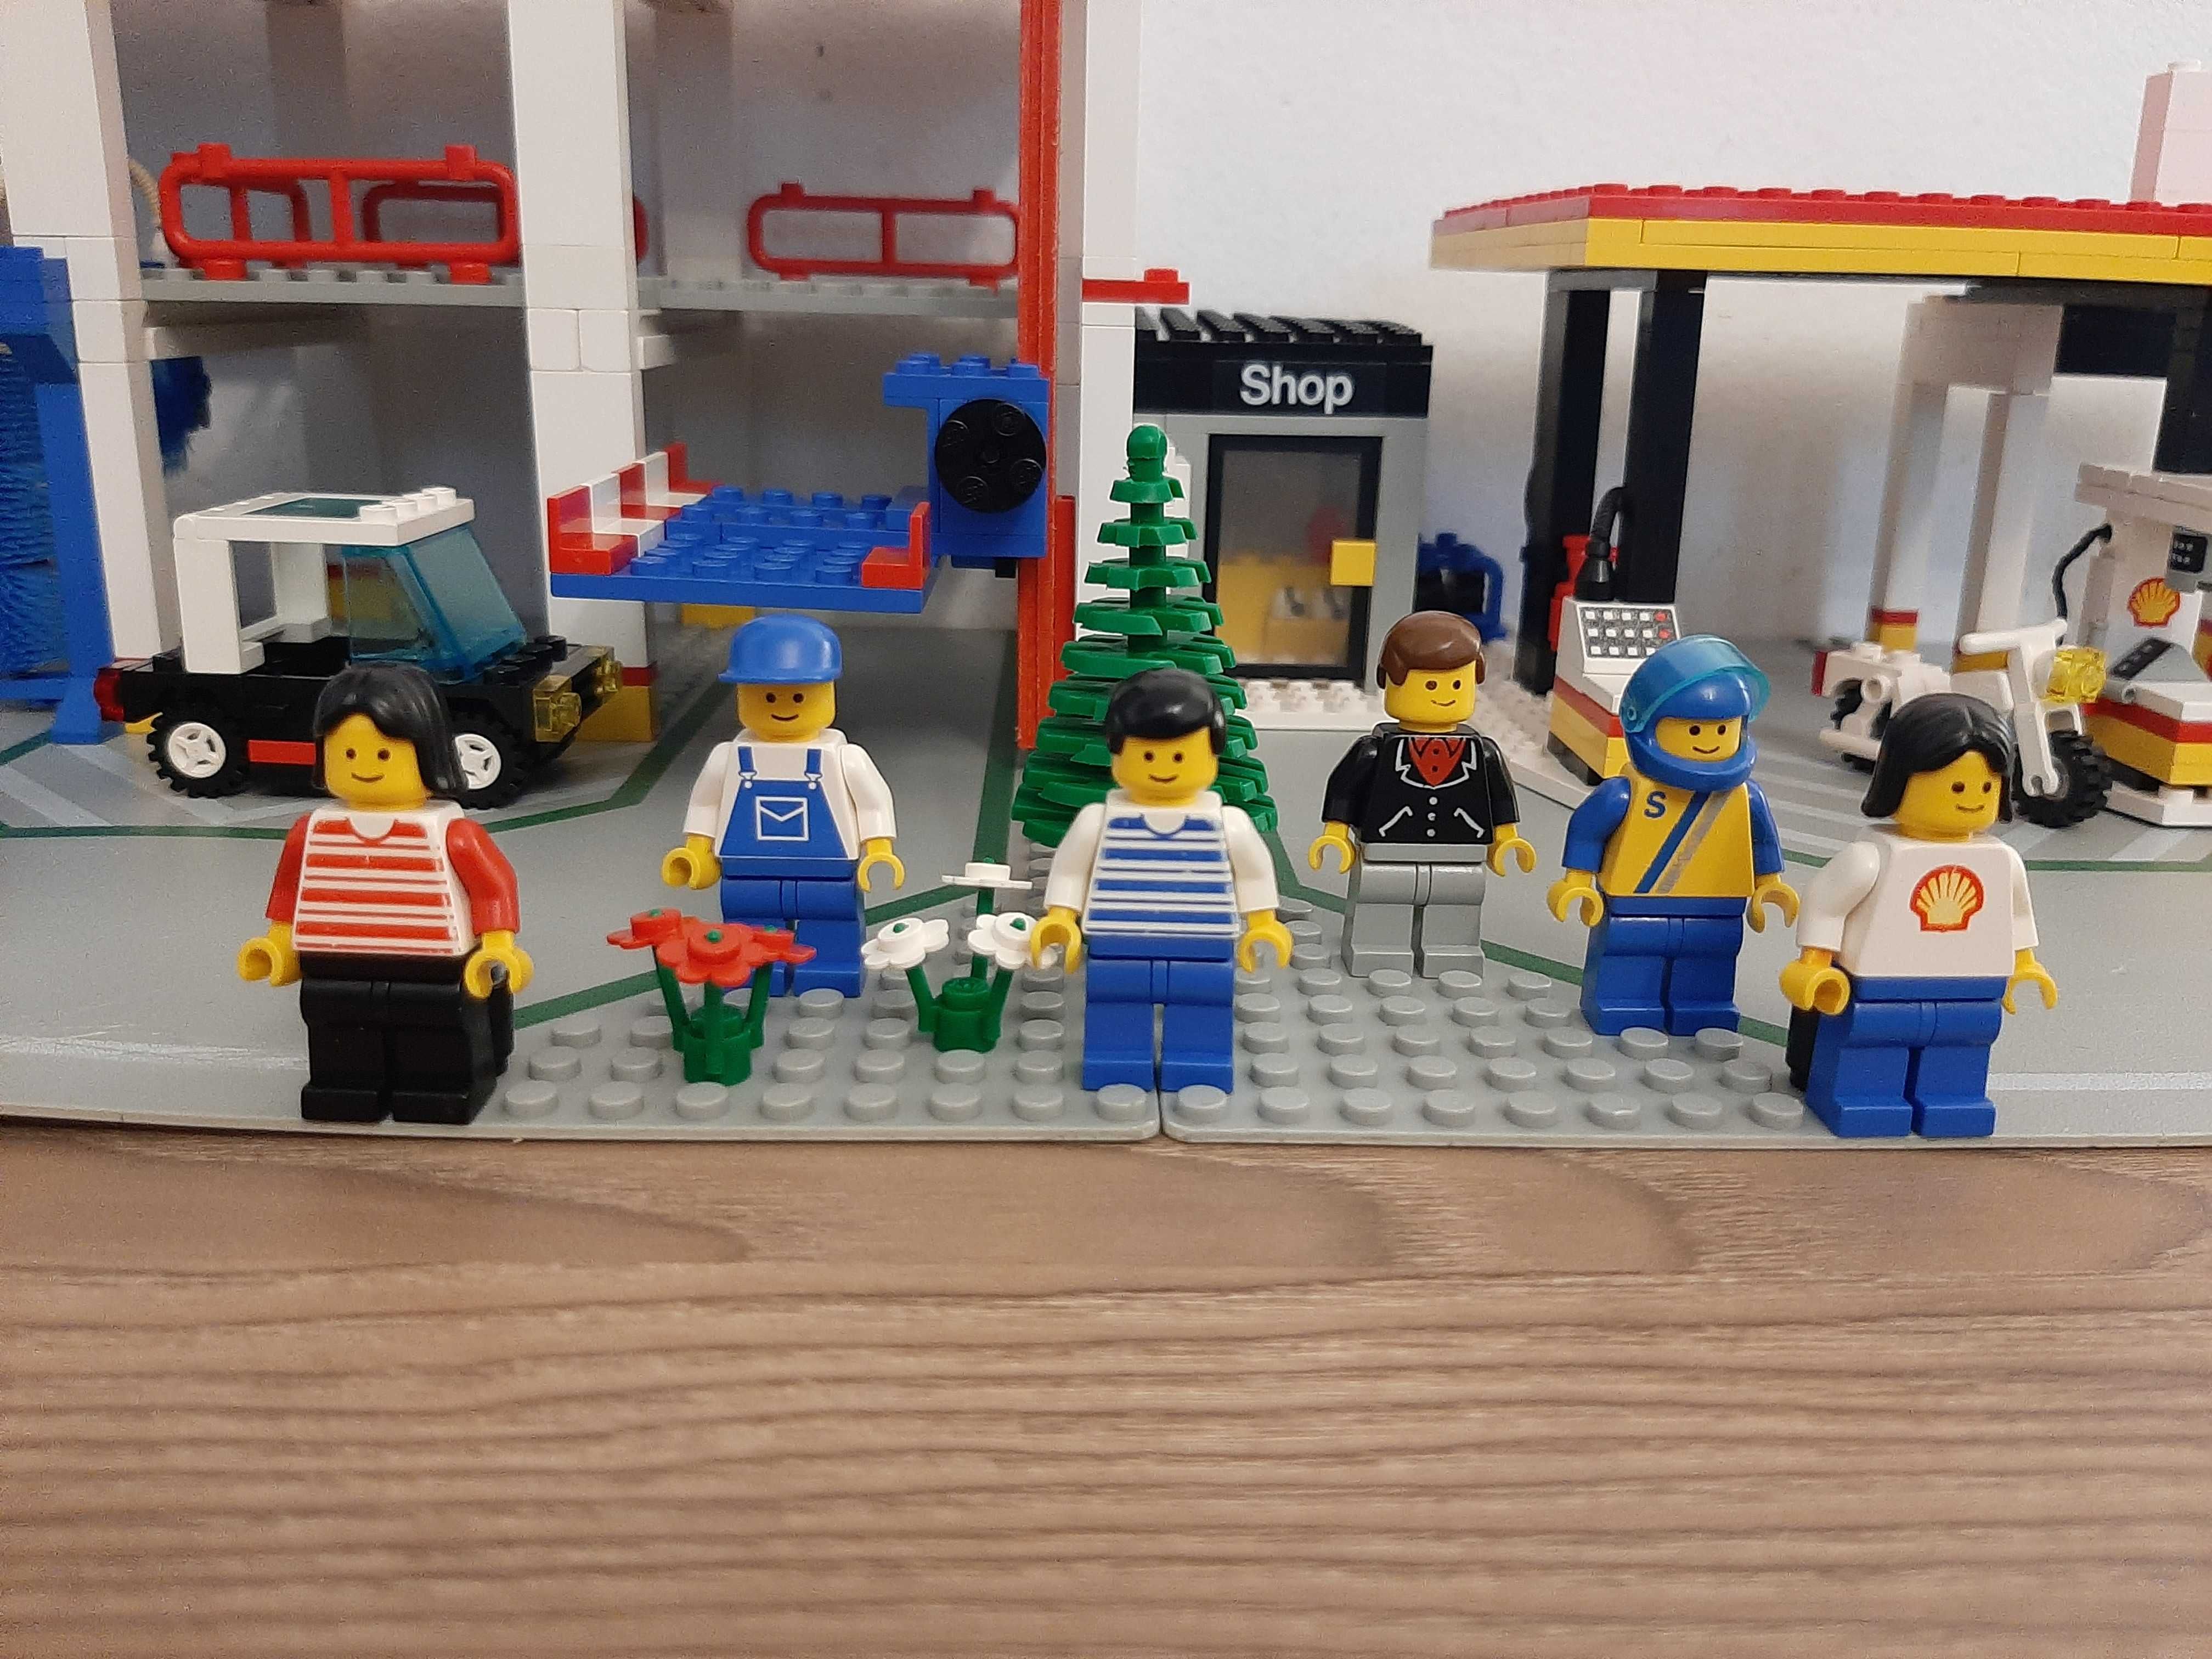 Lego 6394: Metro Park & Service Tower